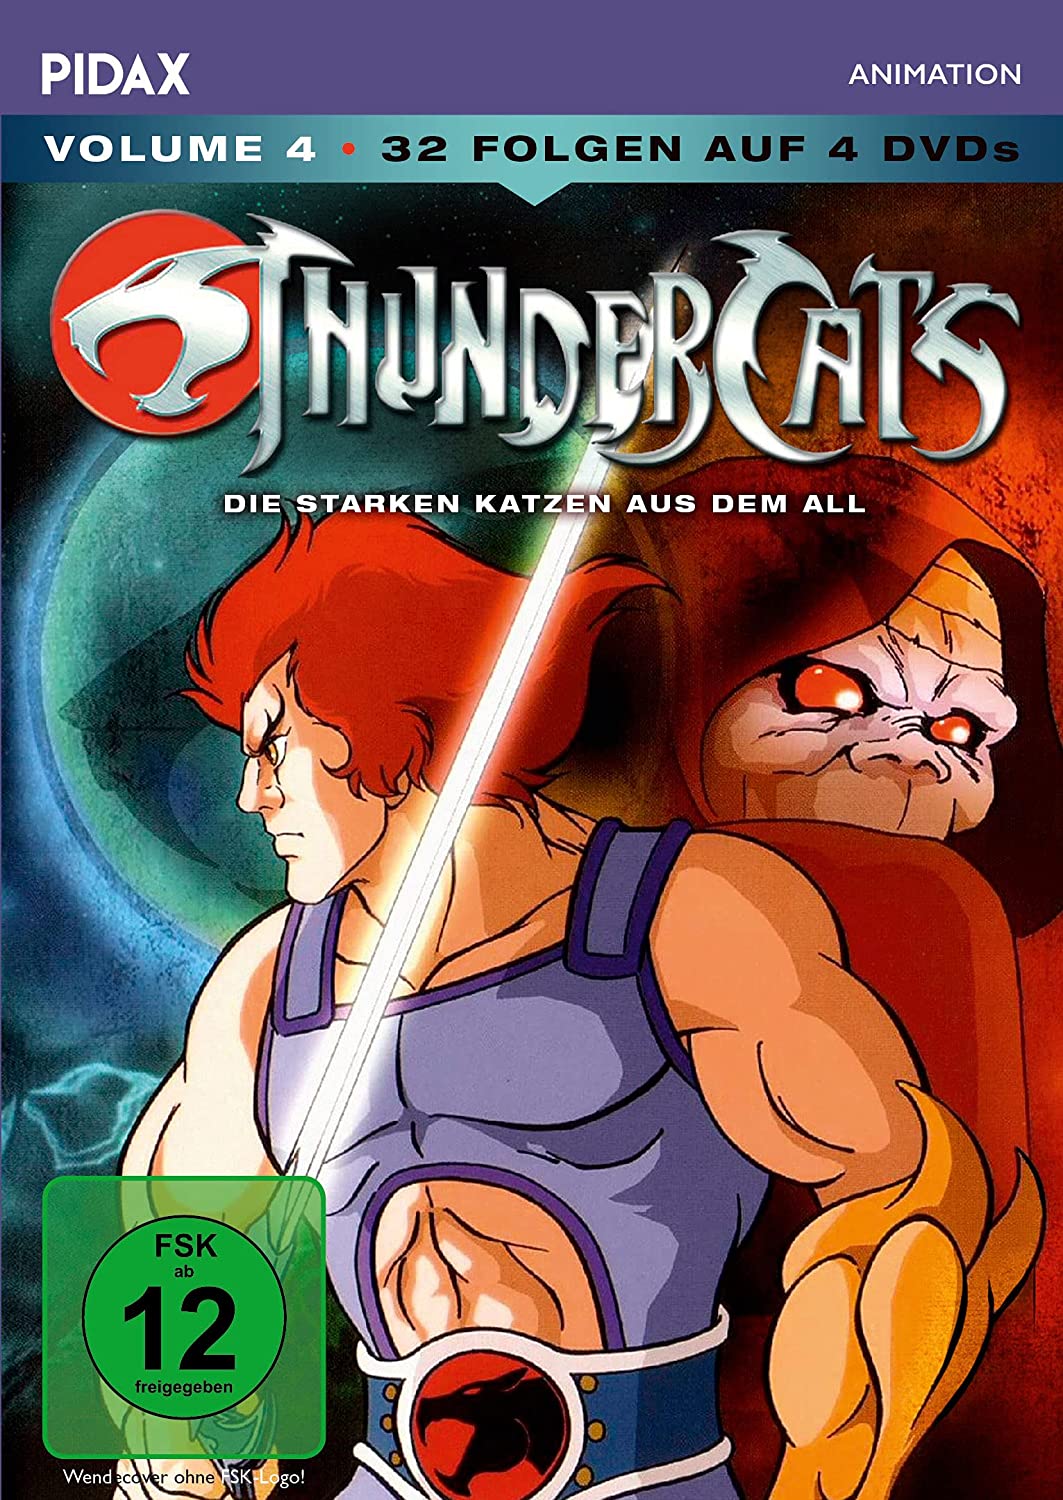 ThunderCats - Die starken Katzen aus dem All, Vol. 4 Weirere 32 Folgen